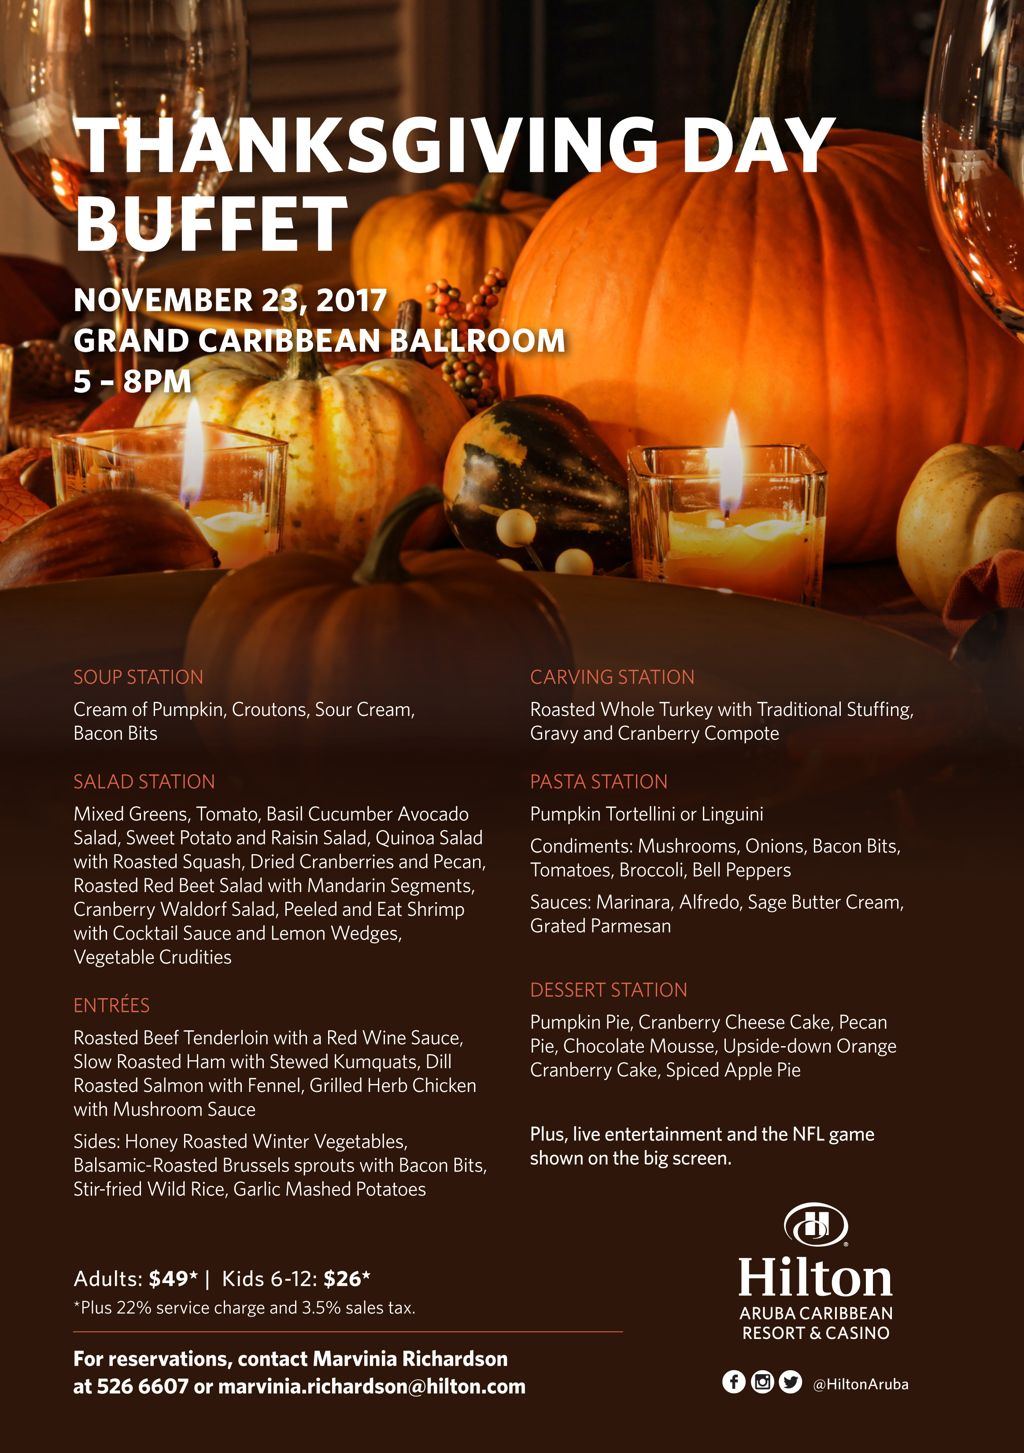 Hilton's Thanksgiving Day Dinner Buffet